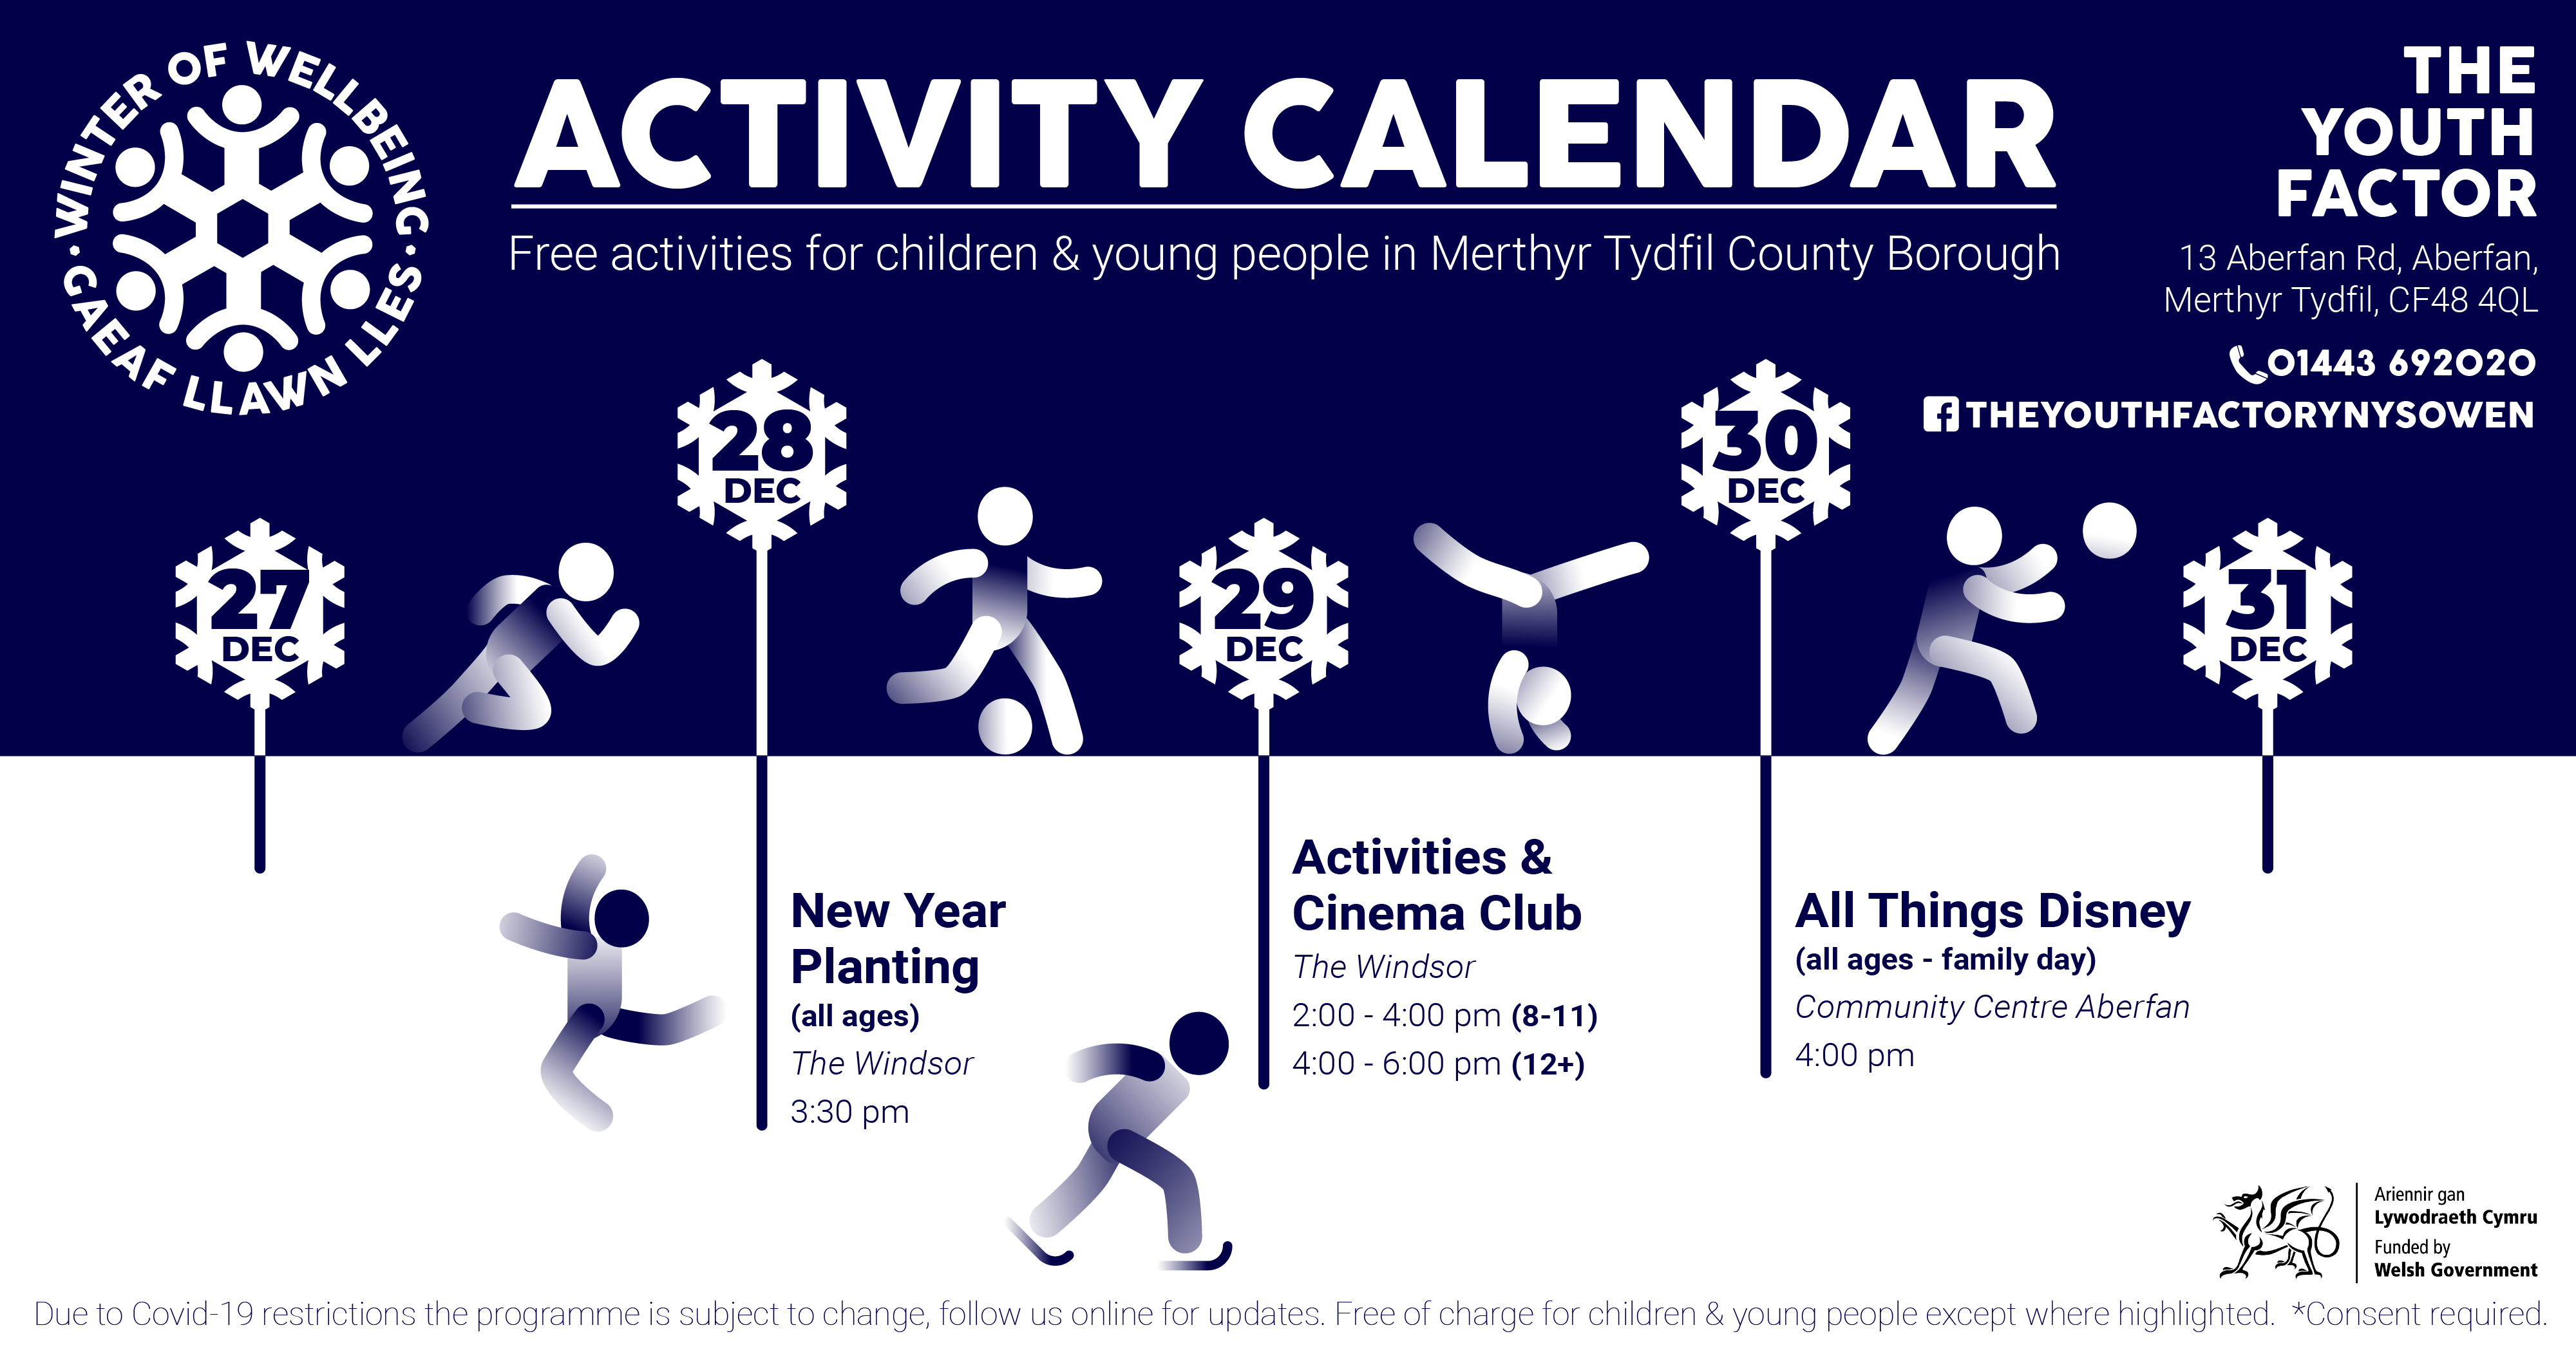 Youth Factor Week 3 Activity Calendar